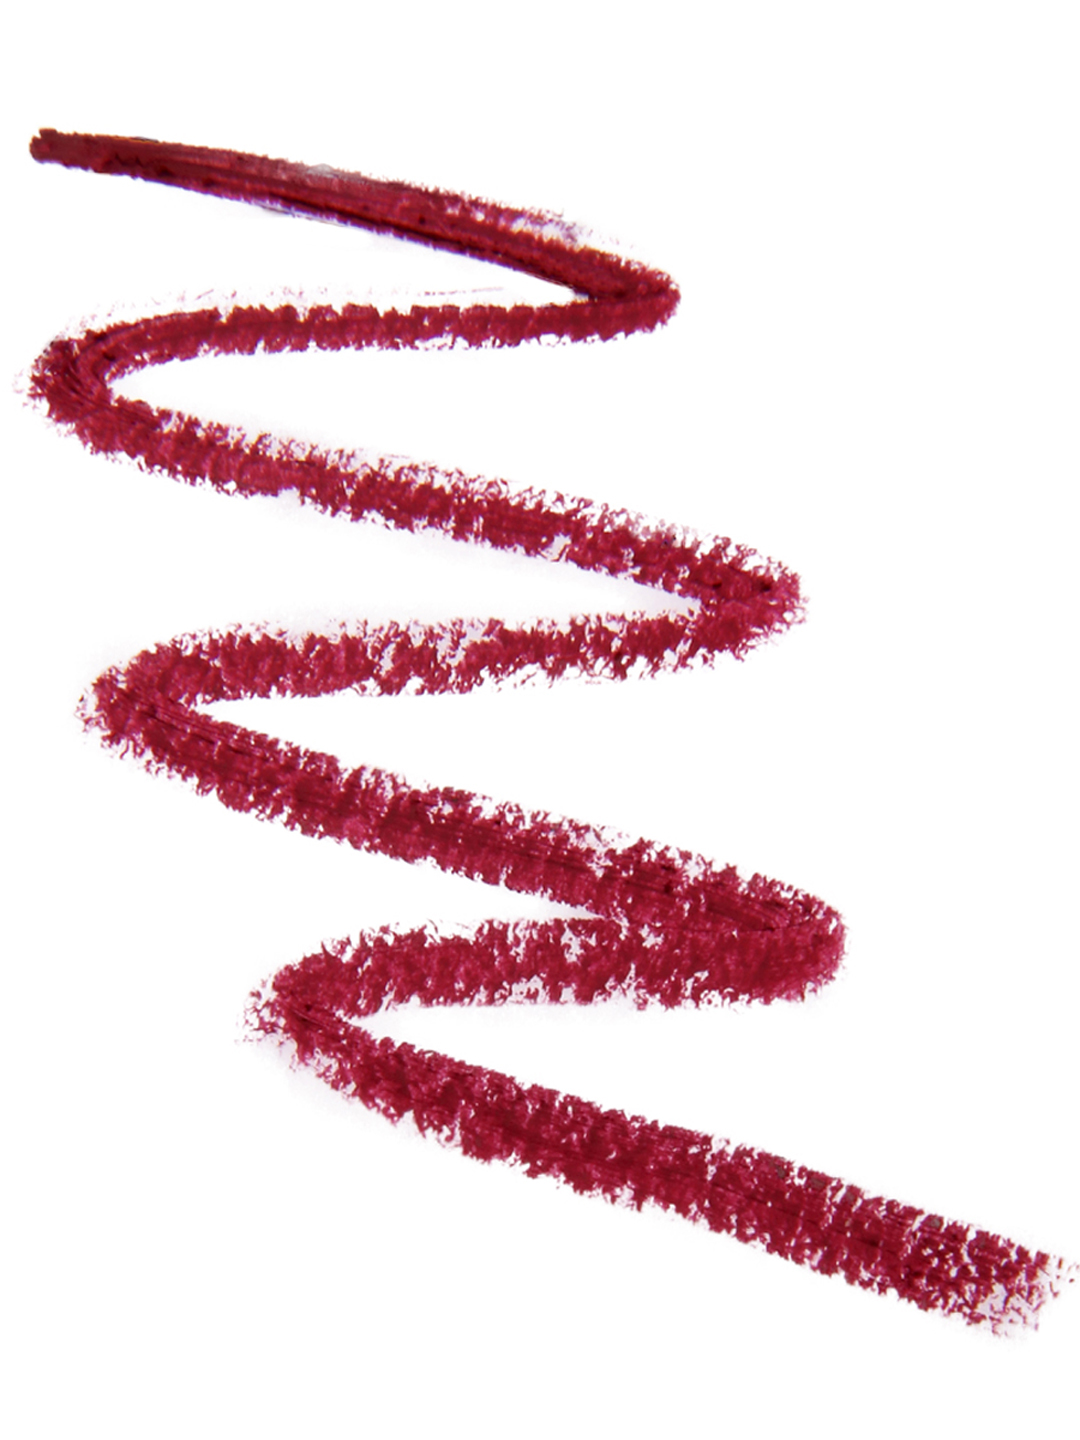 Sedell Paris Mini Lipstick & Lip Liner Pencil Sip Of Red Wine - 1.4g